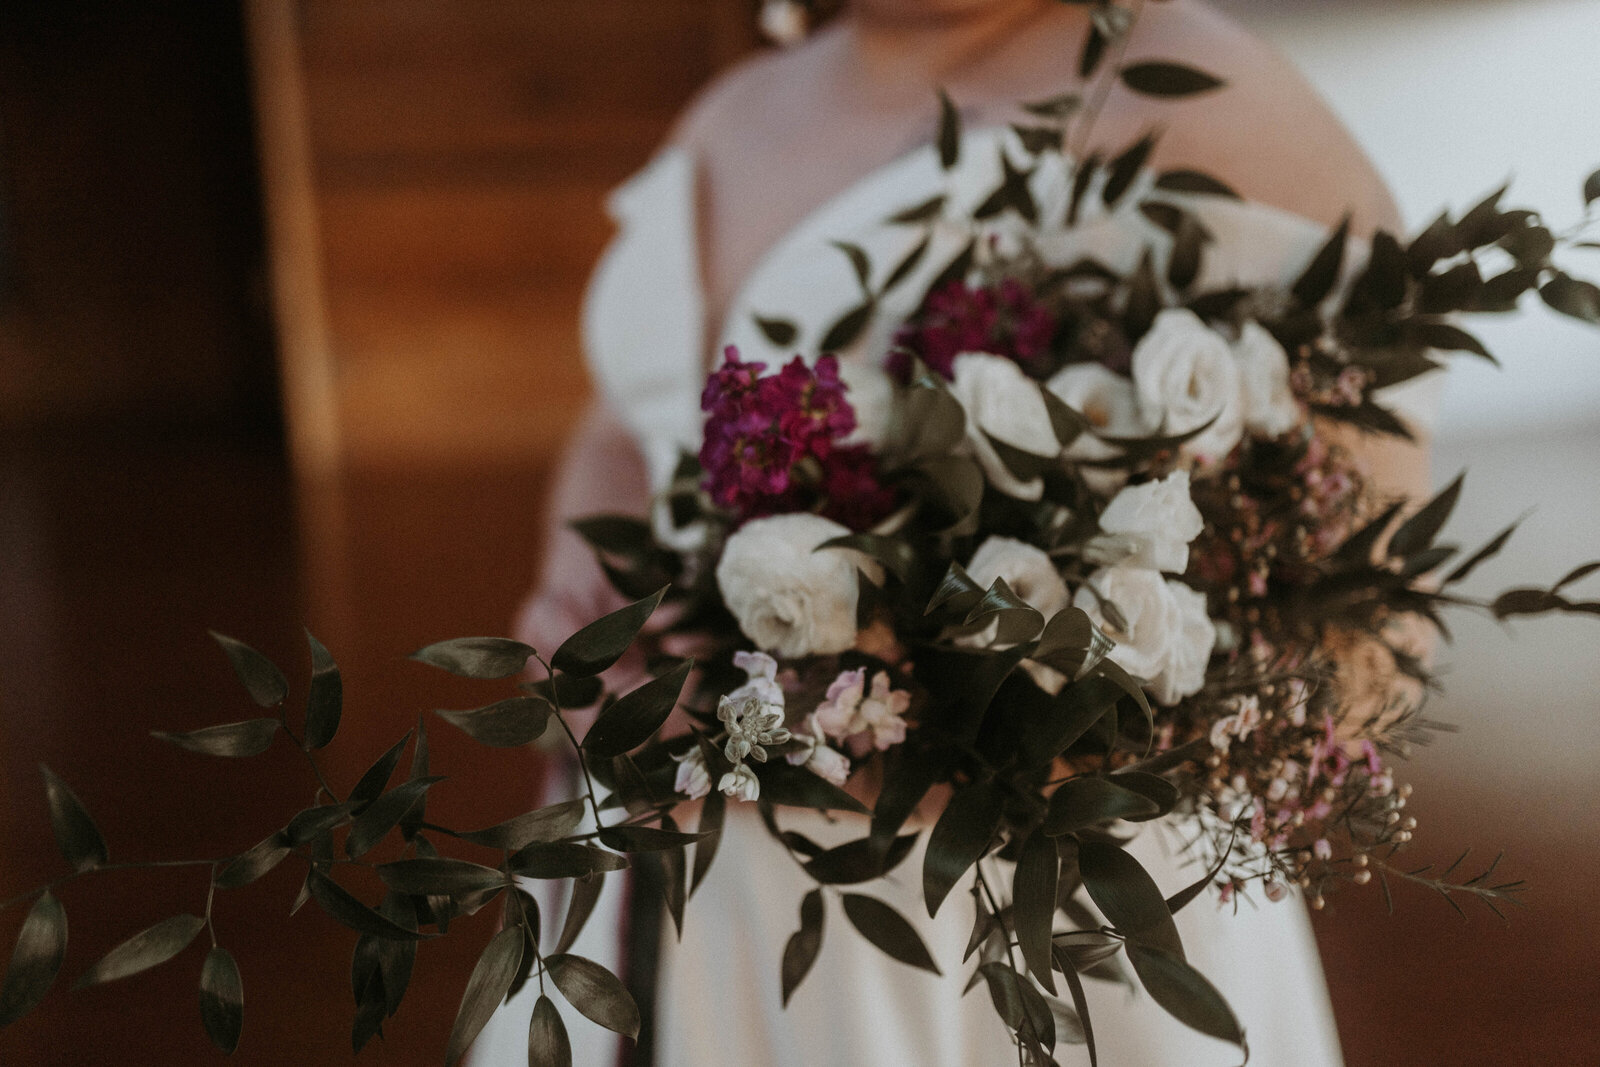 chattanooga-wedding-florist-bridal-bouquet